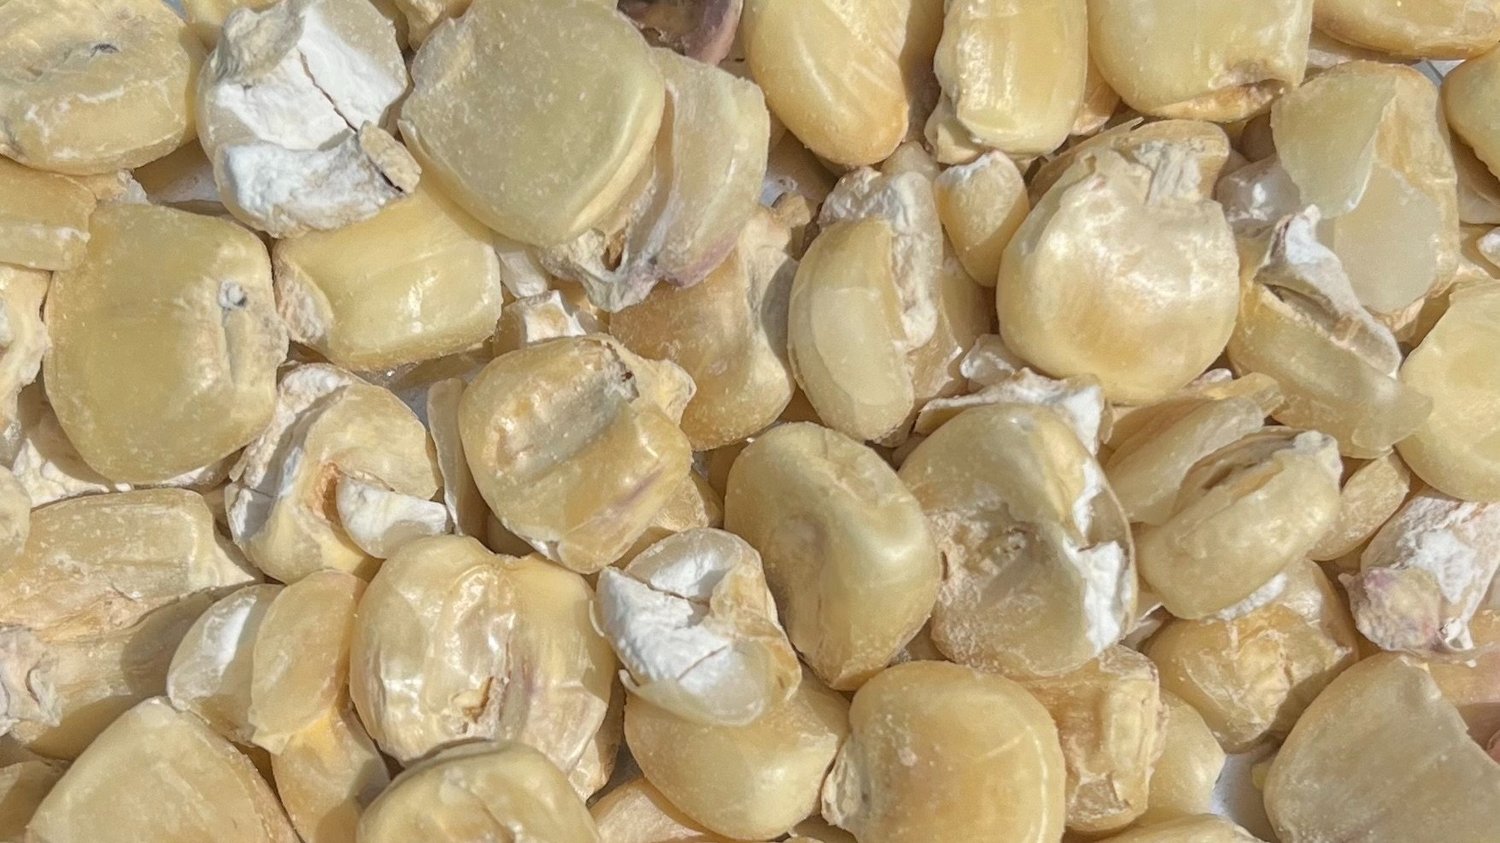 Riverbend Malt House Welcomes Hickory King Corn Malt Variety To Malted Corn Portfolio